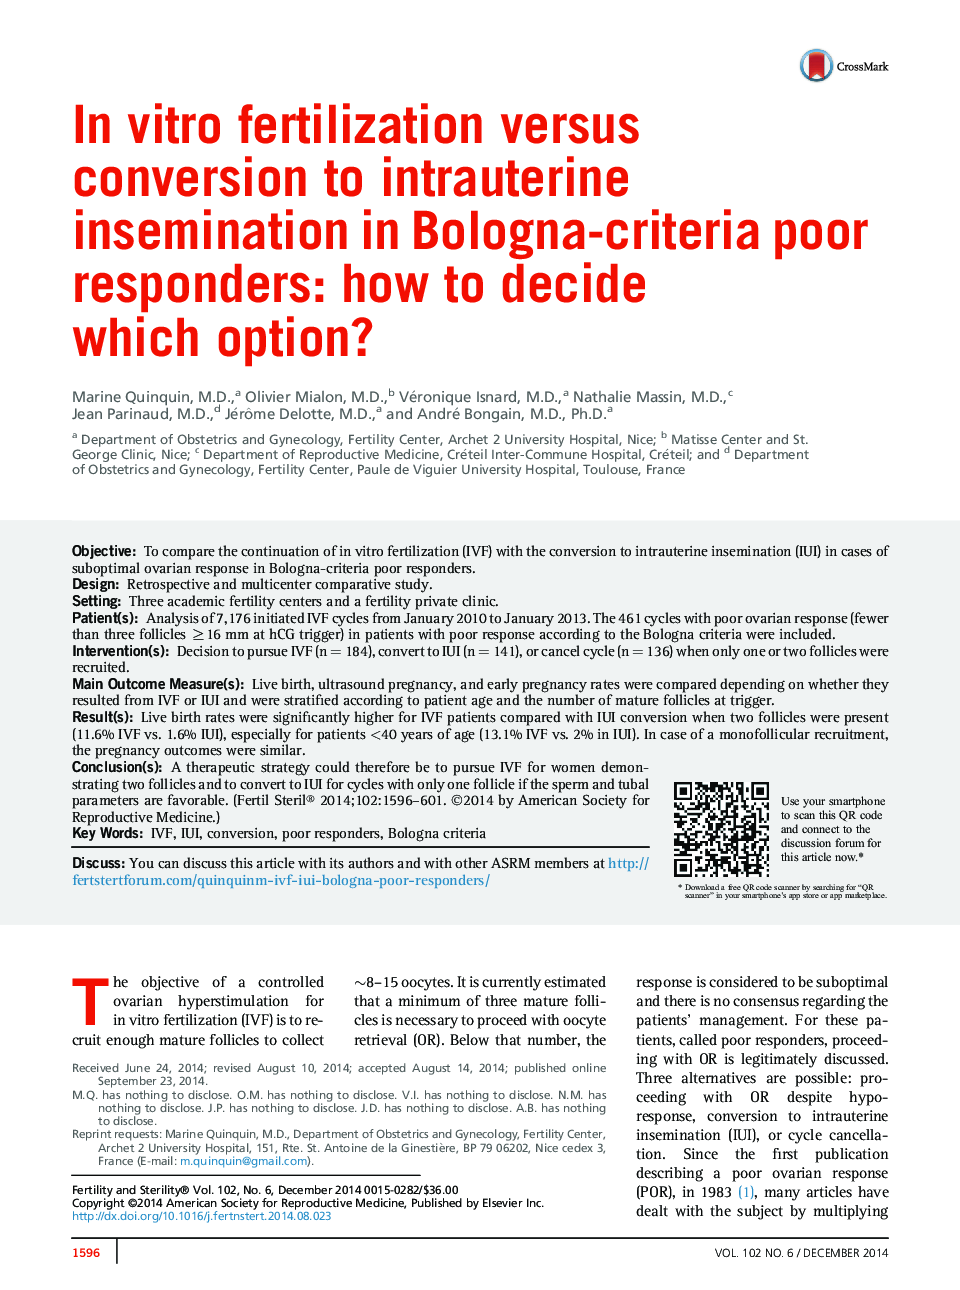 InÂ vitro fertilization versus conversion to intrauterine insemination in Bologna-criteria poor responders: how to decide which option?